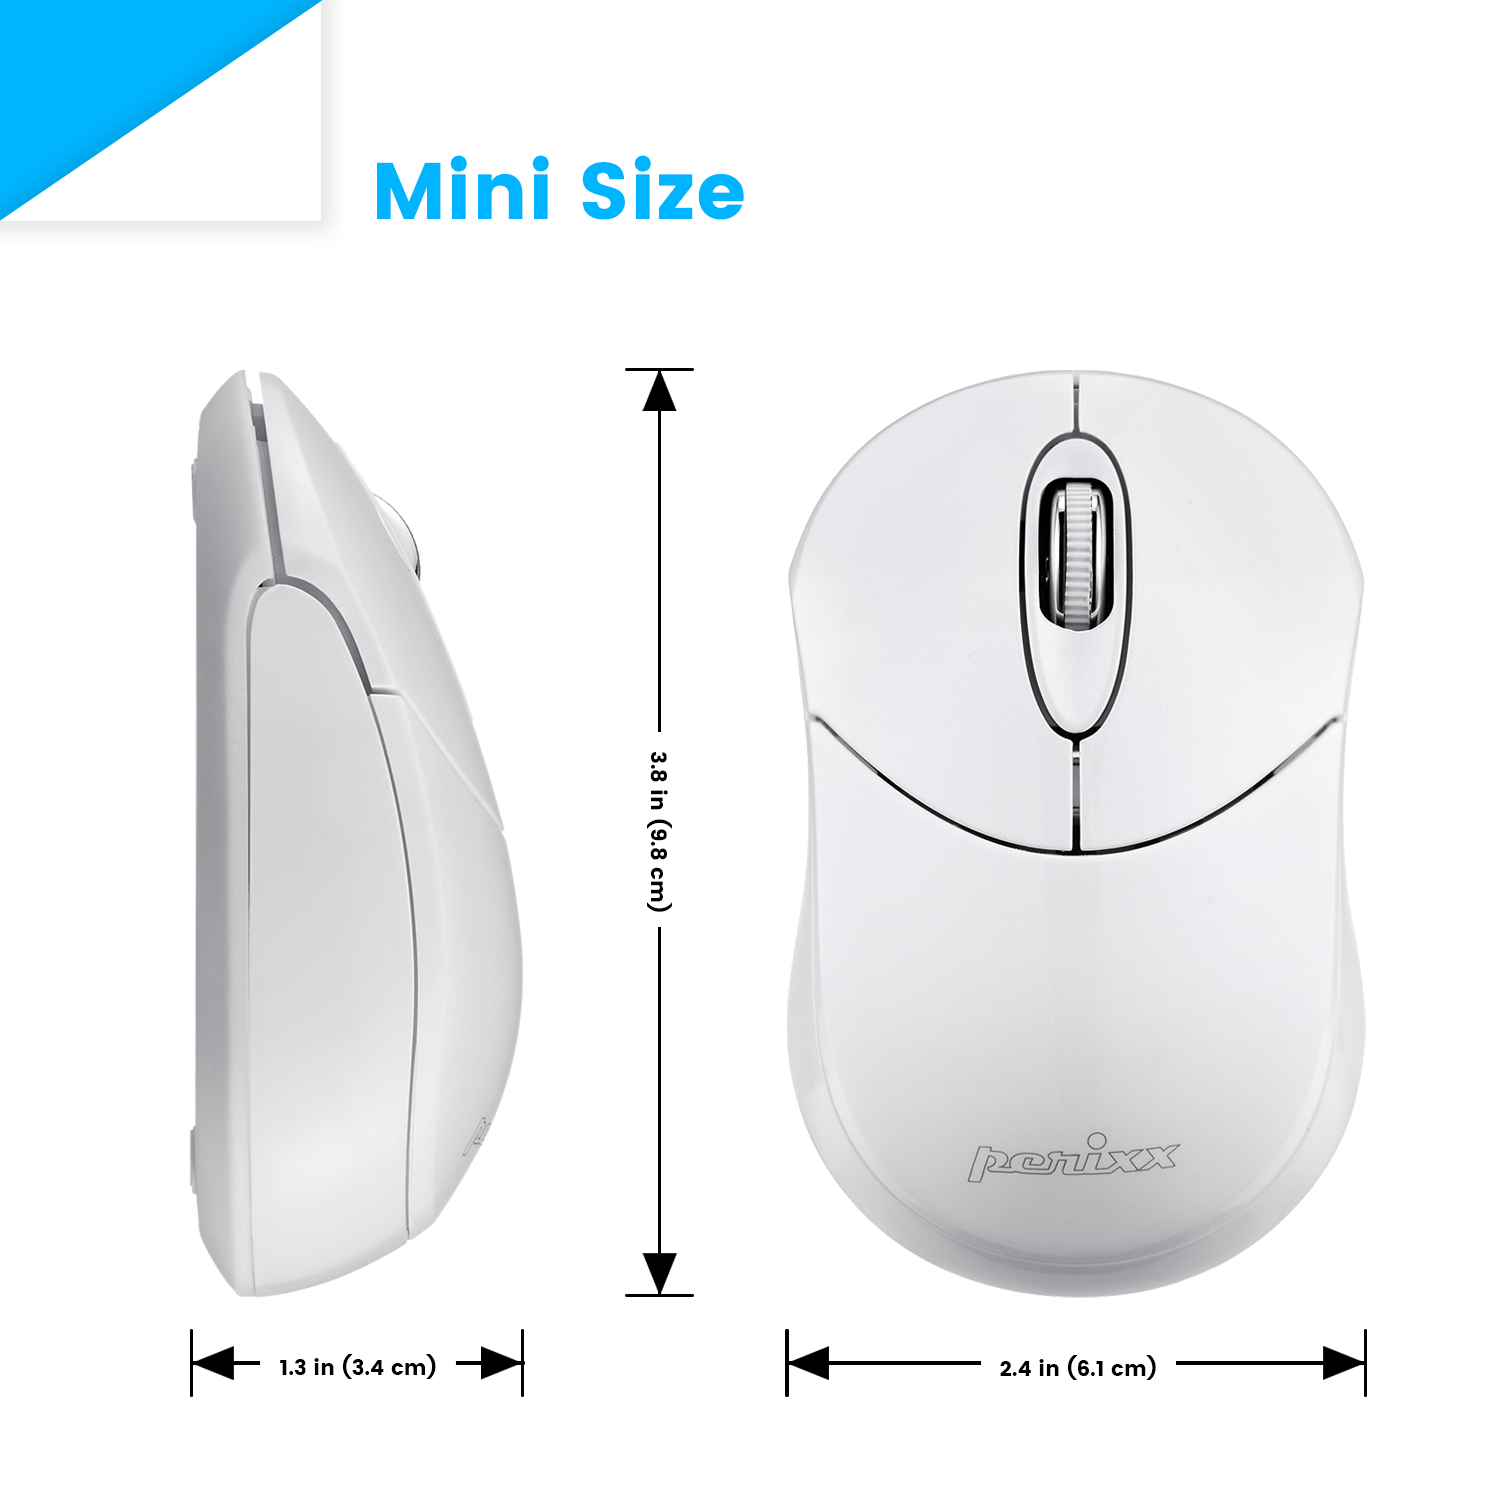 Portable Compact Mouse